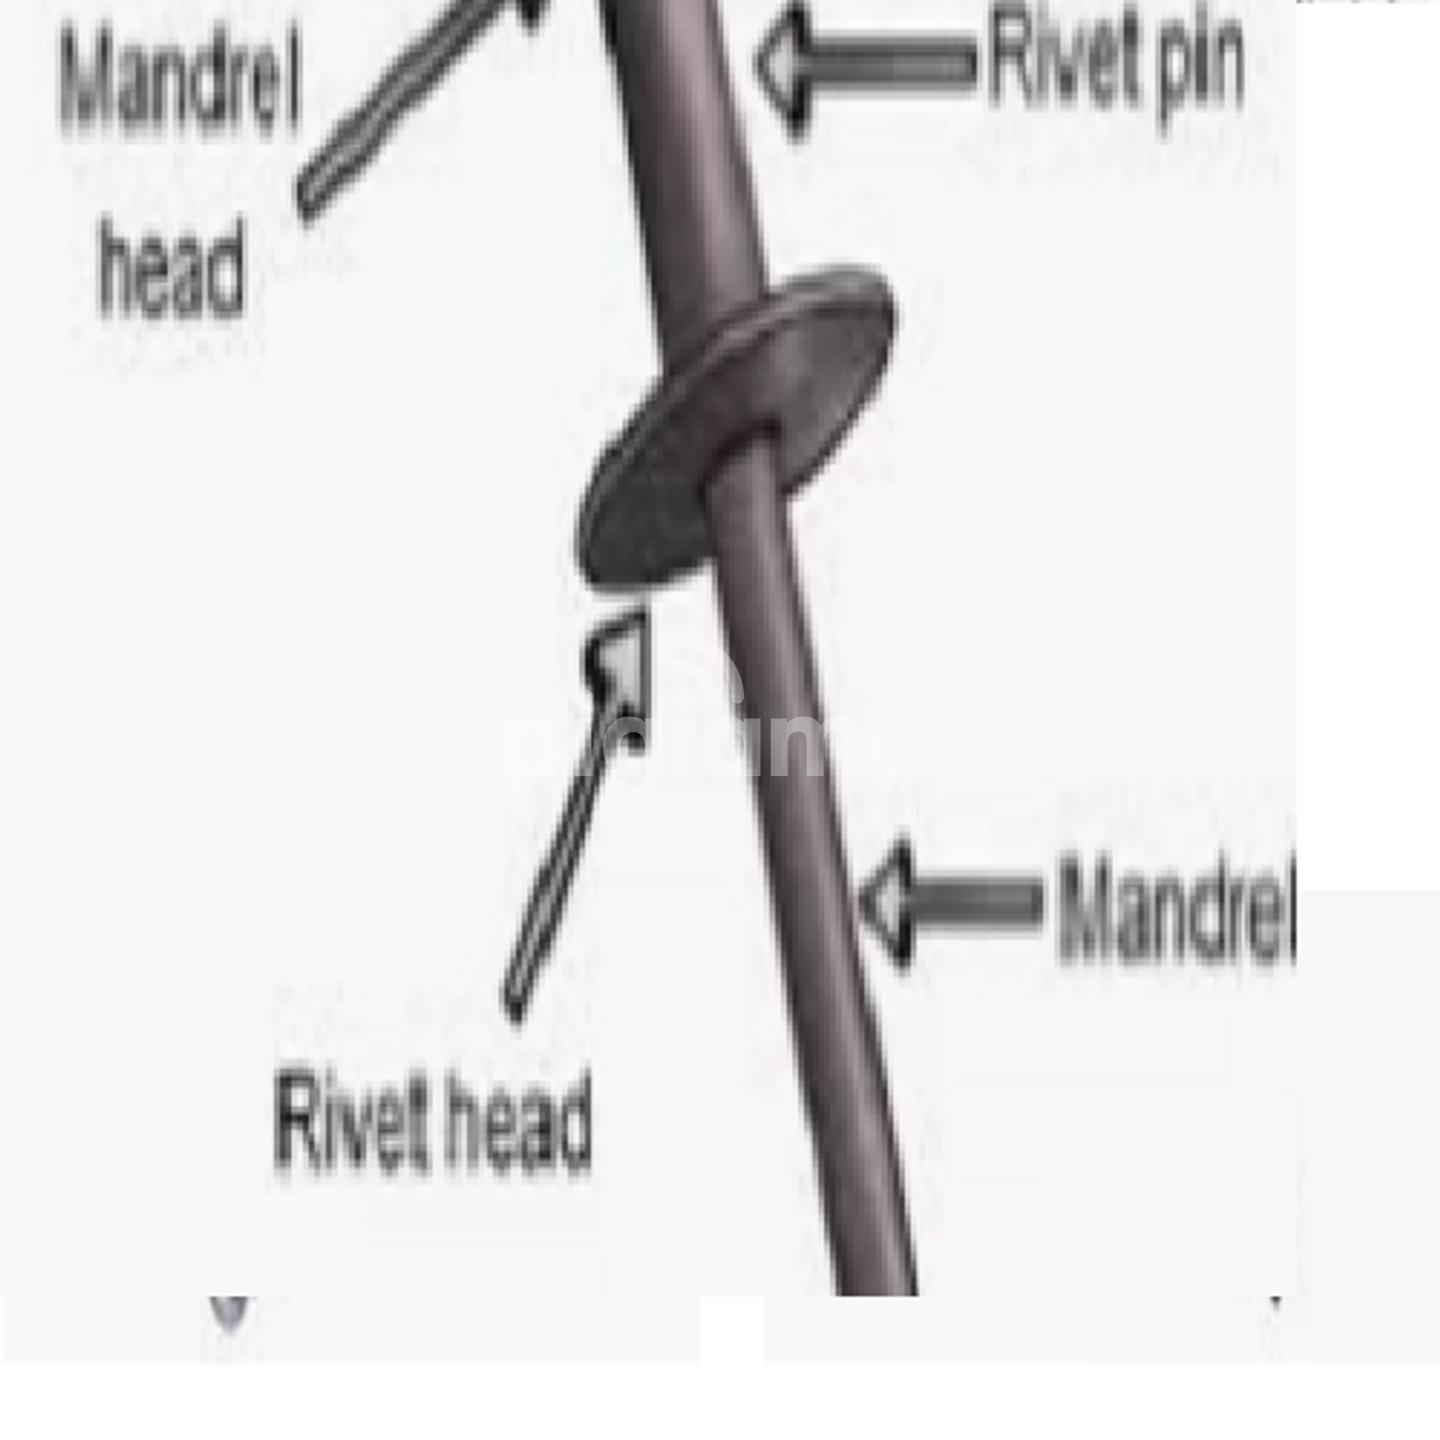 anatomy of a rivethead